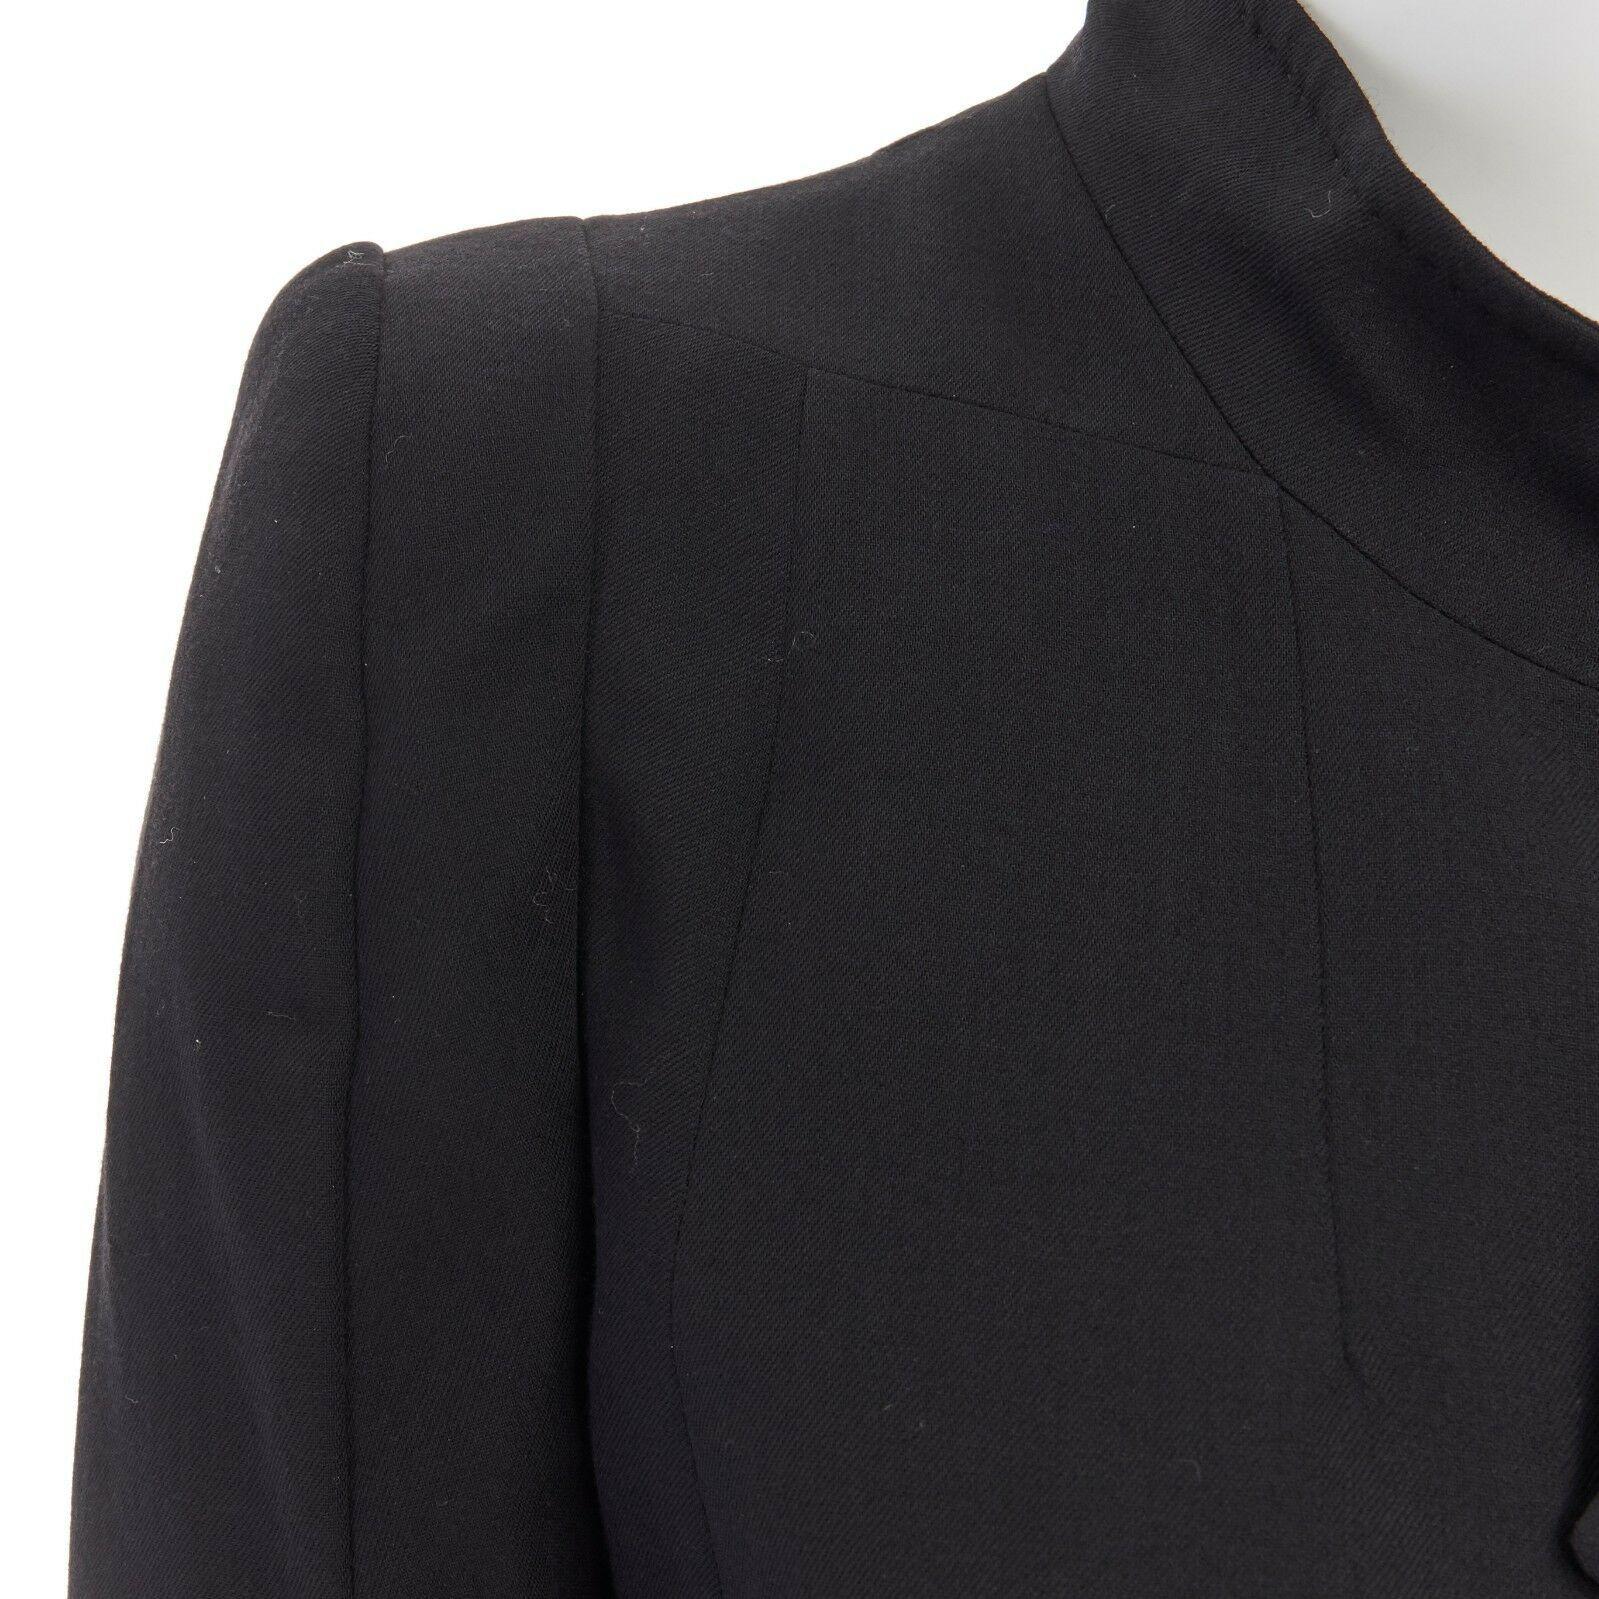 ANN DEMEULEMEESTER black draped front classic wool blazer jacket FR36 US2 UK8 S 4